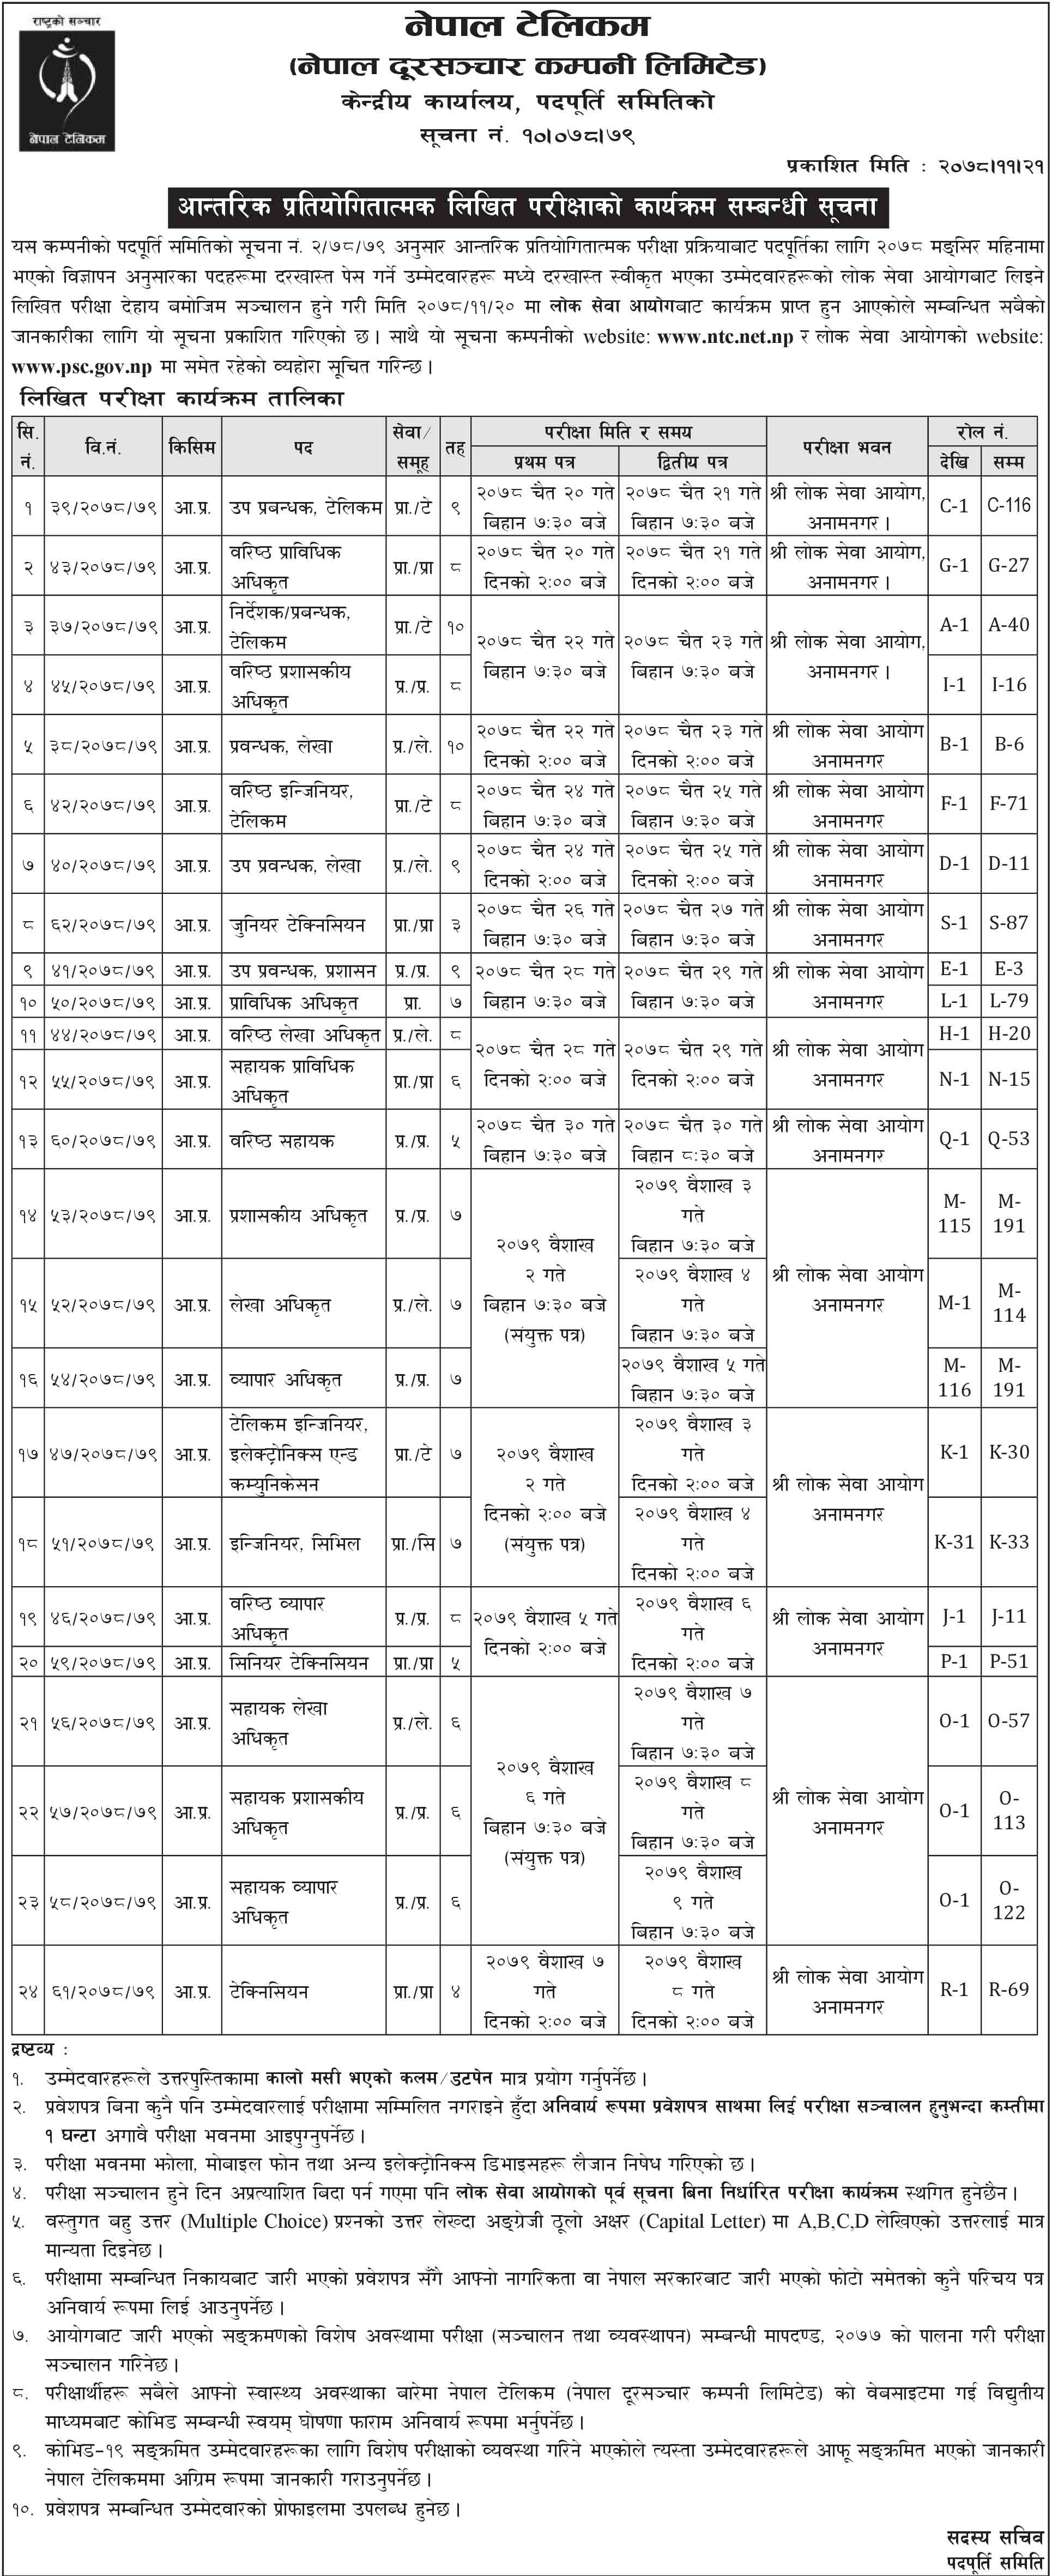 Exam Routine / Schedule of Nepal Telecom (Internal)